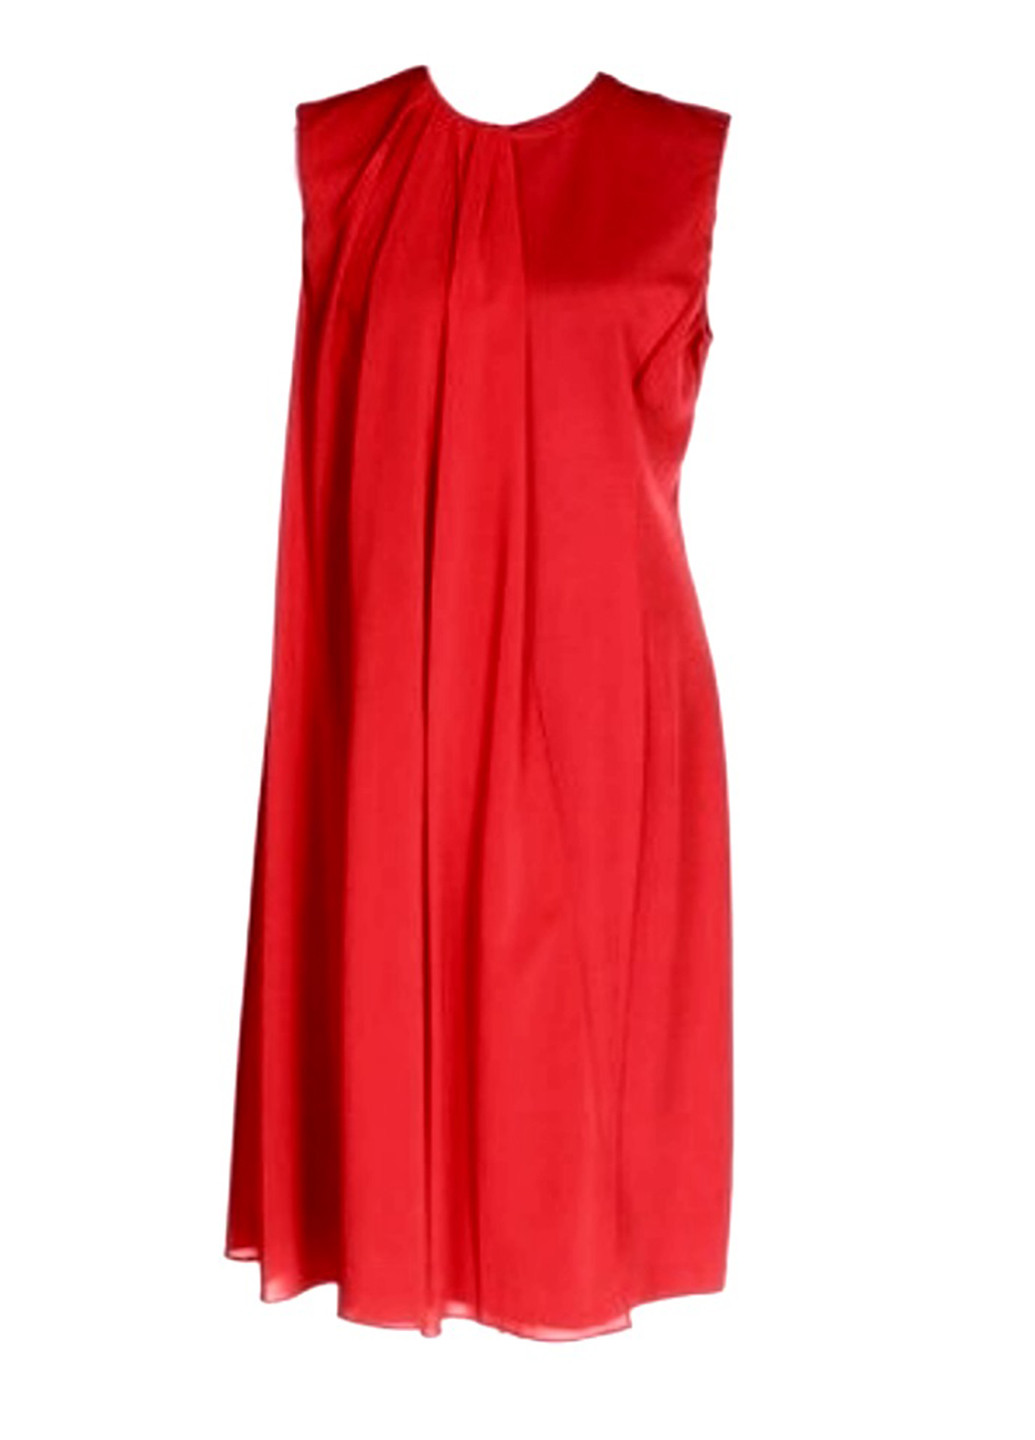 Красное коктейльное платье футляр The J. Peterman Company однотонное